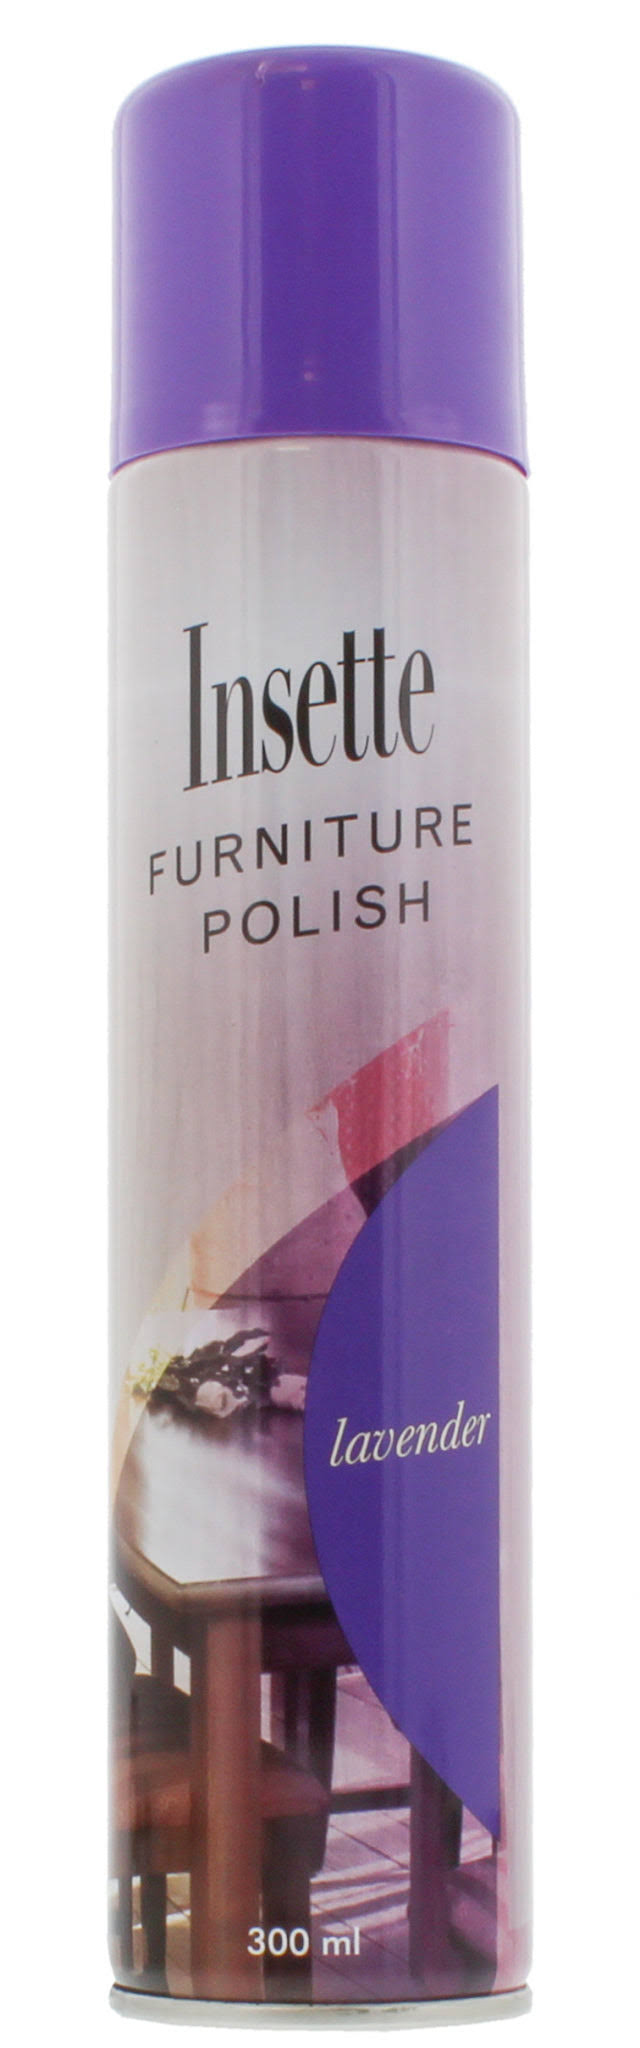 12 x Insette 300ml Furniture Polish Lavender 01/24 11/24 (En;Pt;Se;Pl;Lt)